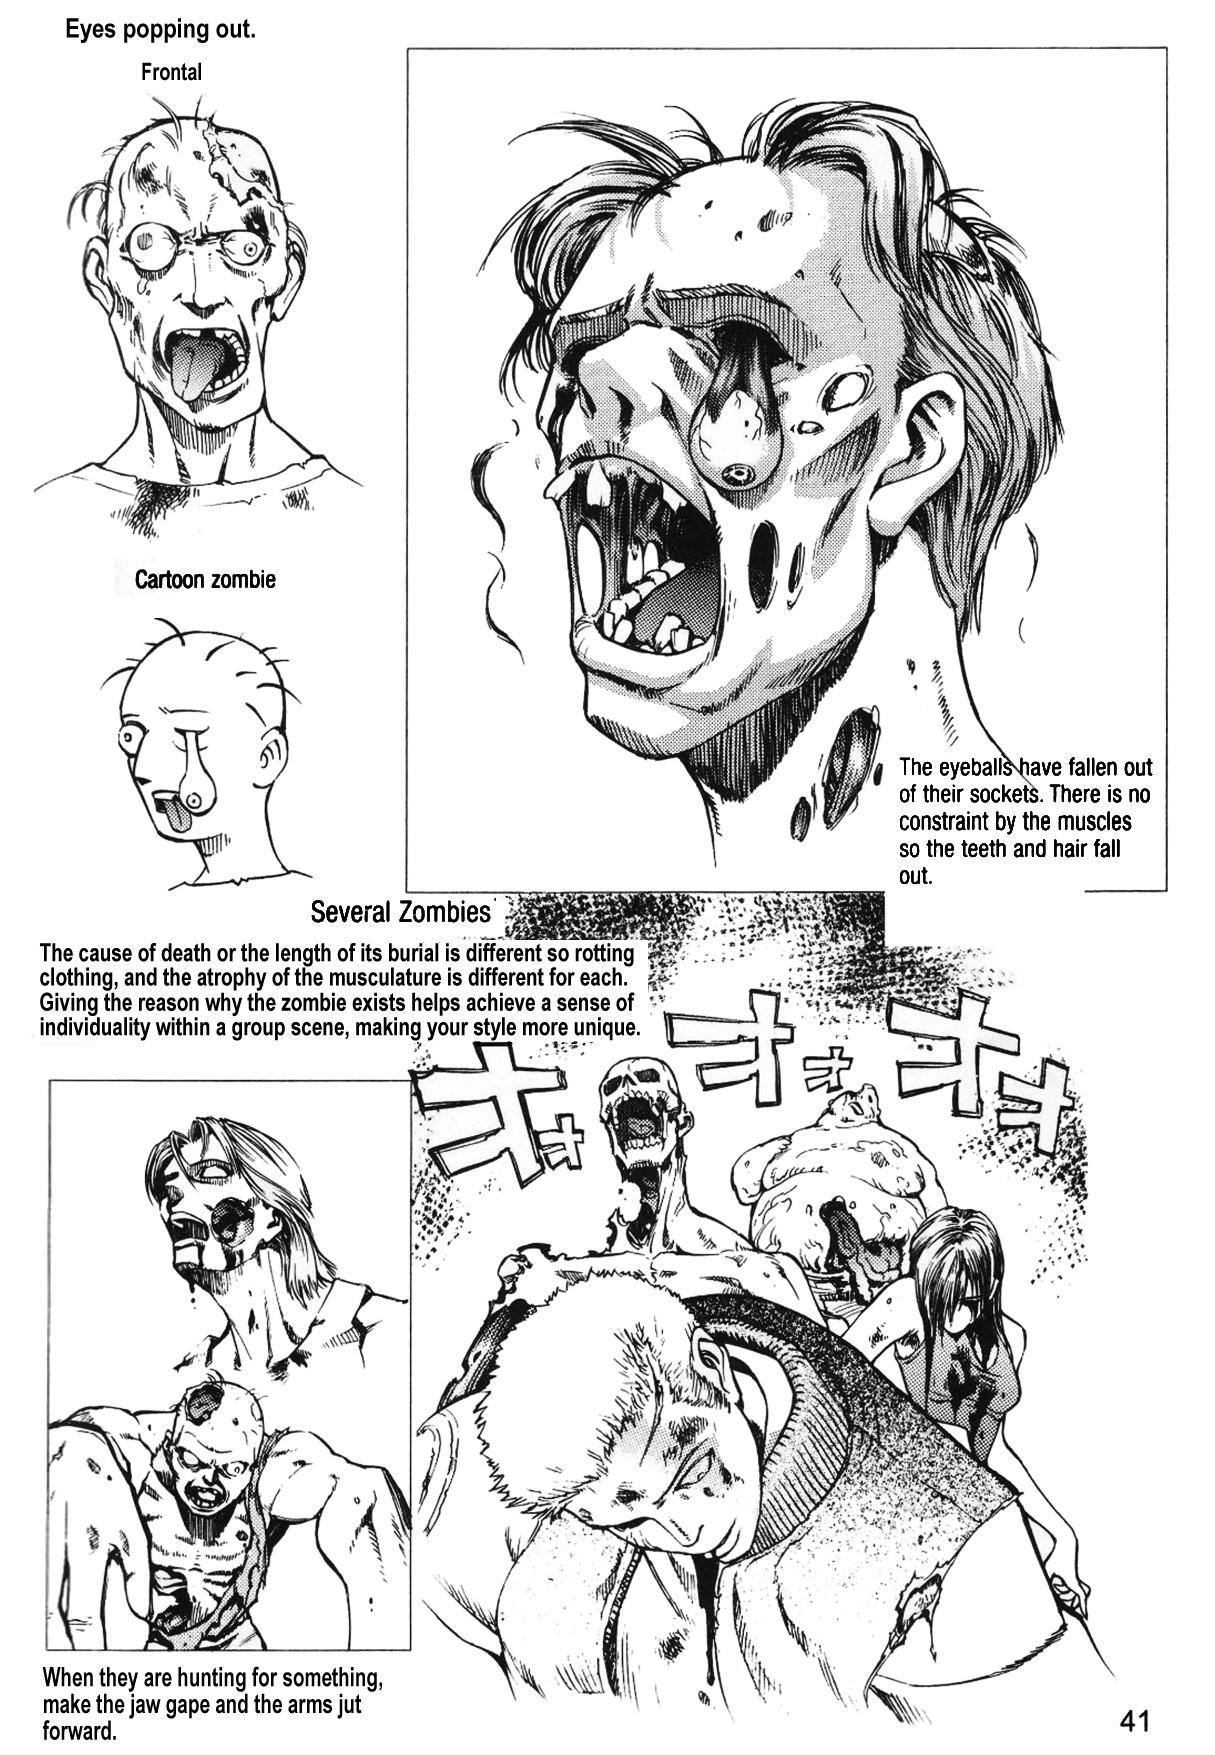 How to Draw Manga Vol. 24, Occult & Horror by Hikaru Hayashi 44